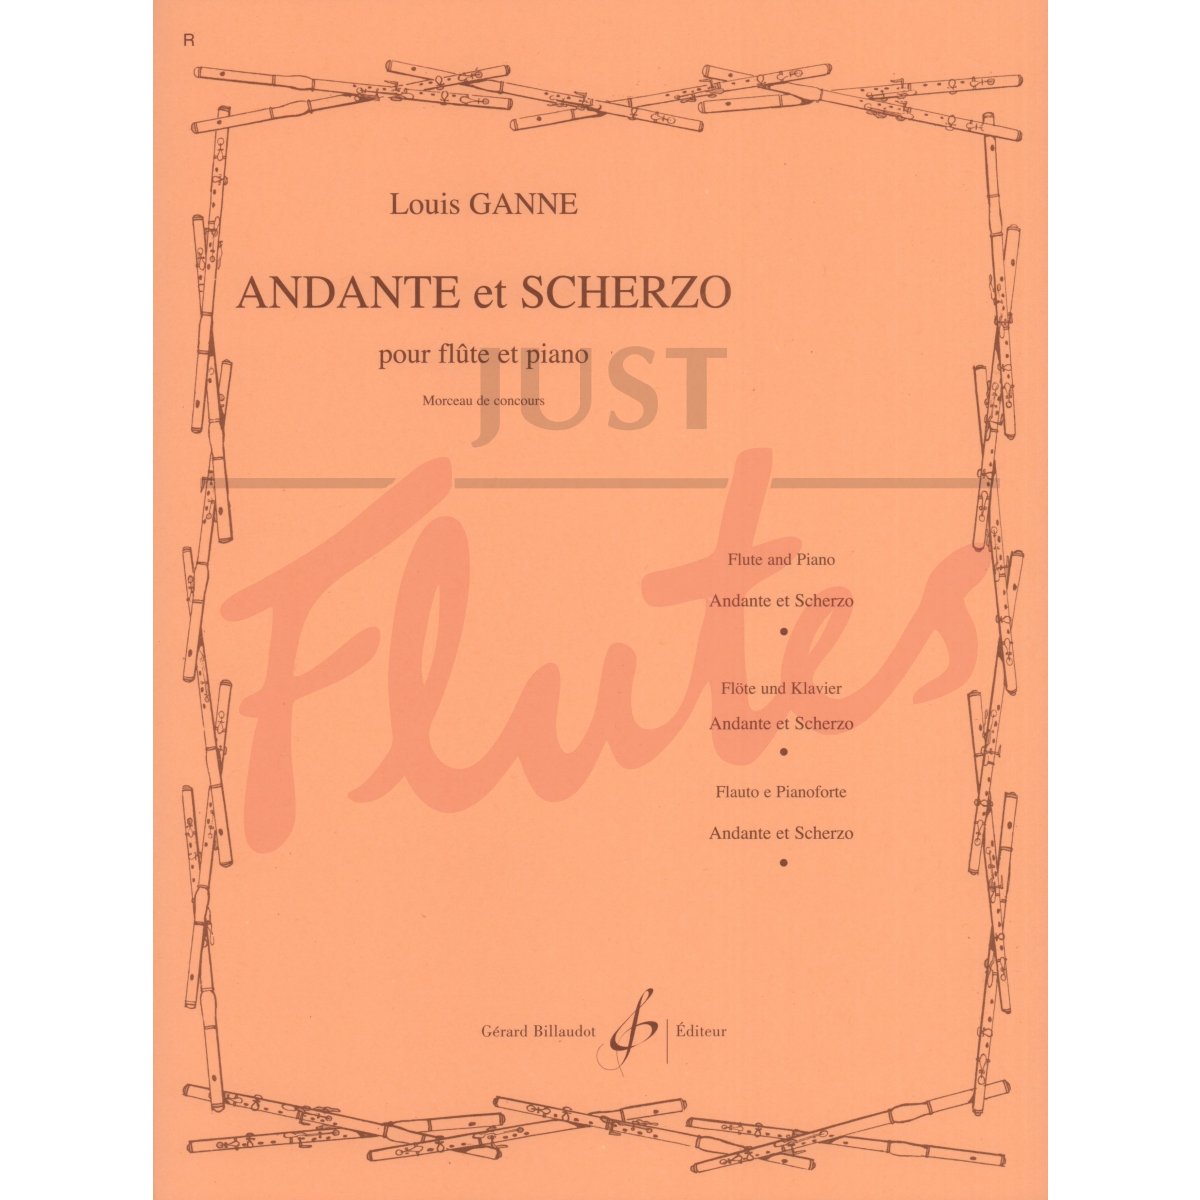 Andante and Scherzo for Flute and Piano